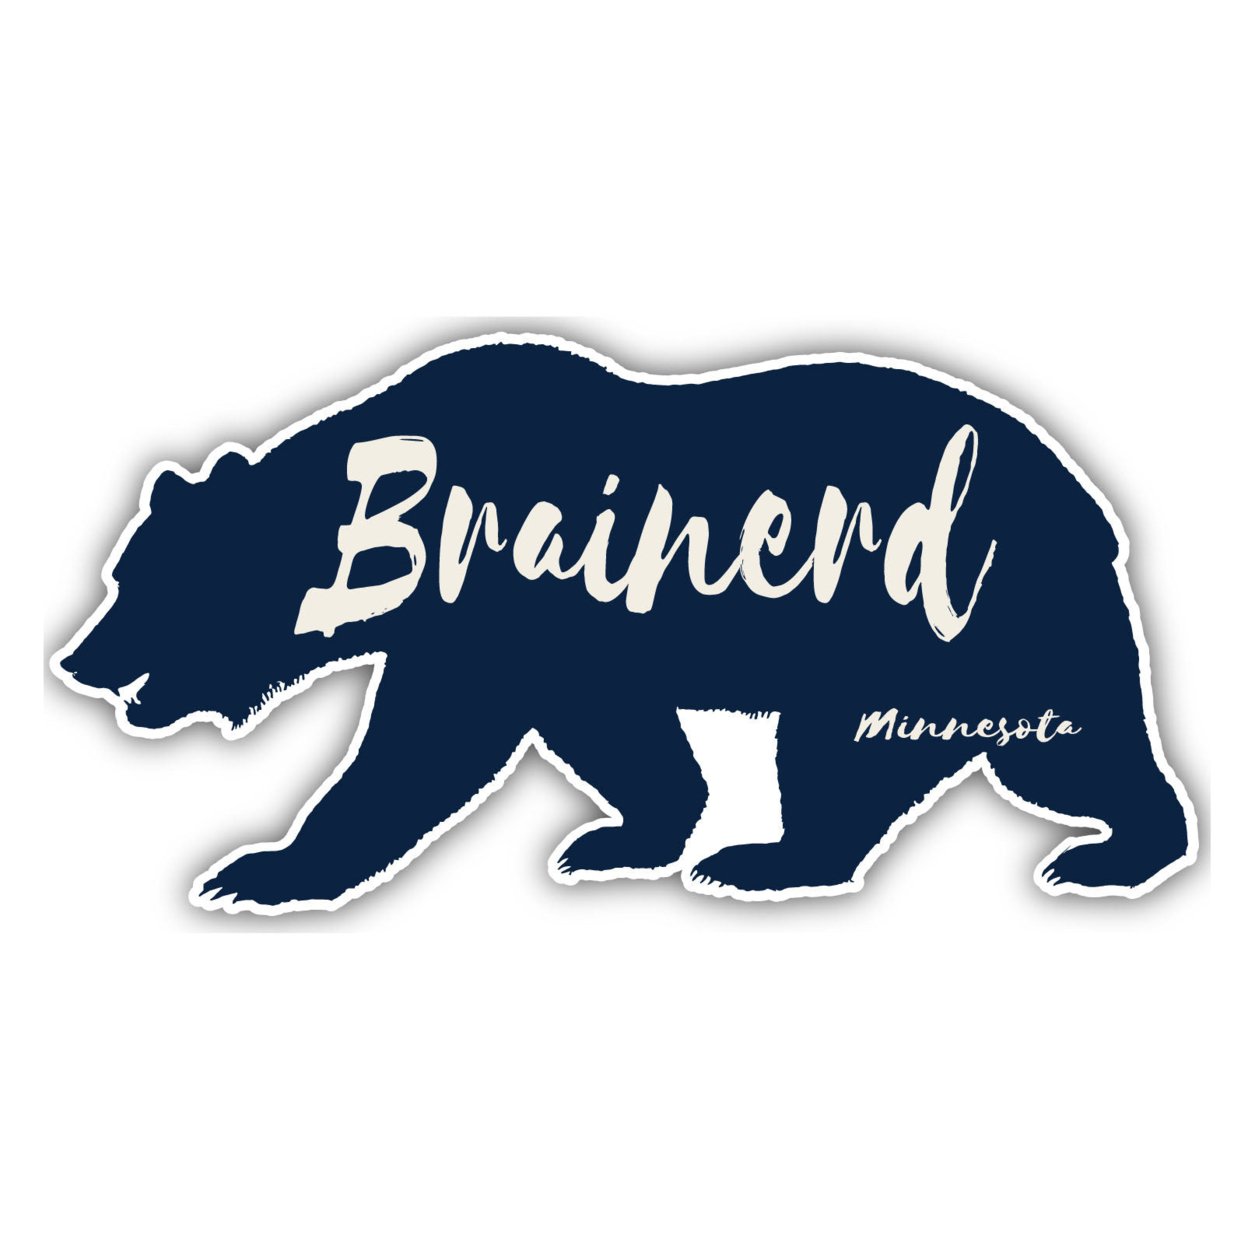 Brainerd Minnesota Souvenir Decorative Stickers (Choose Theme And Size) - Single Unit, 6-Inch, Tent